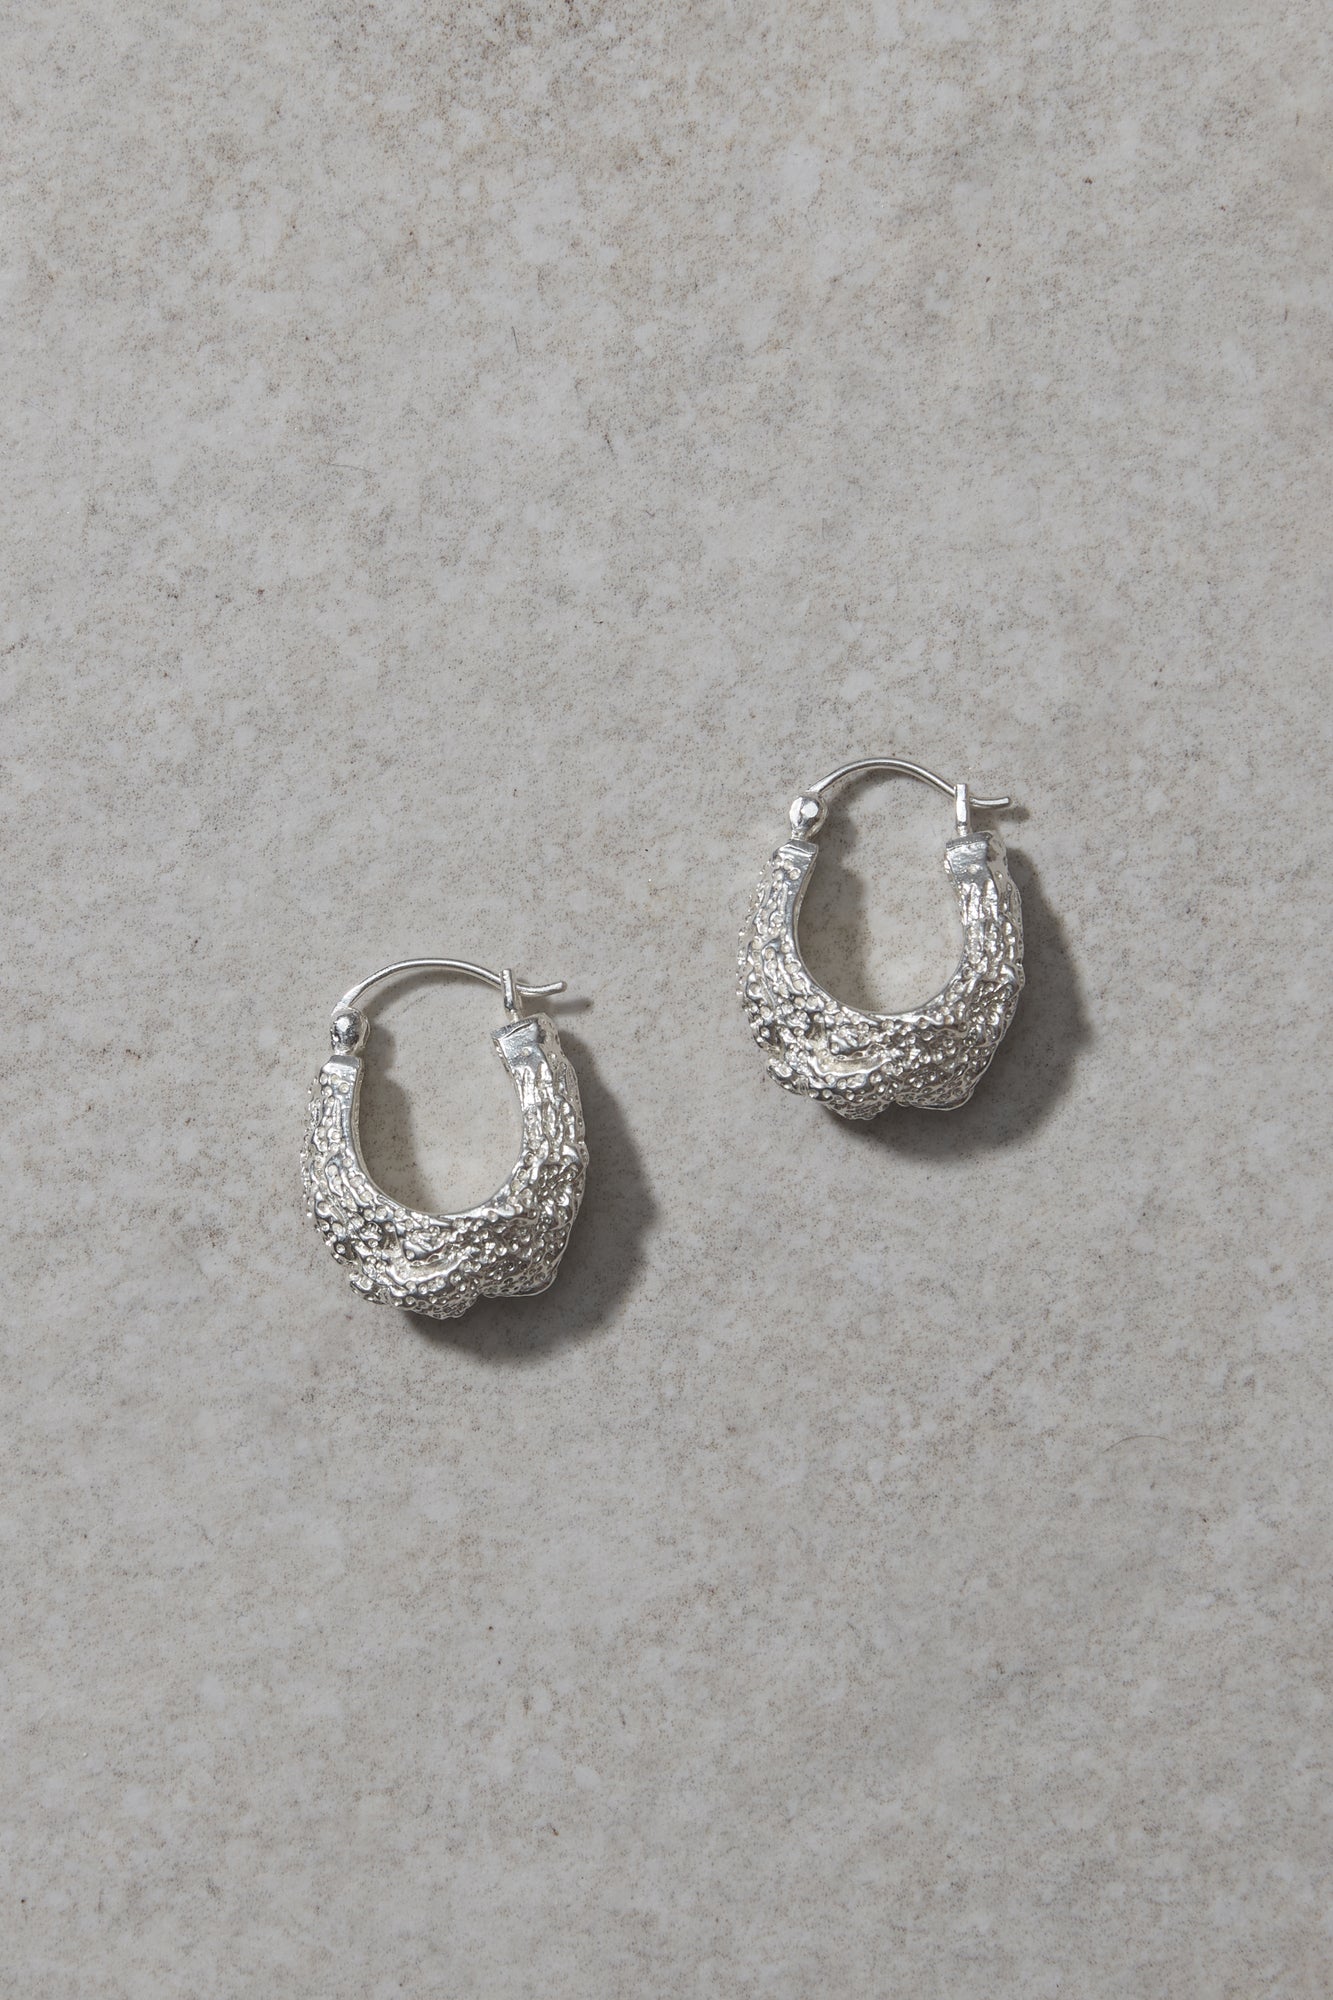 Organic coral earrings